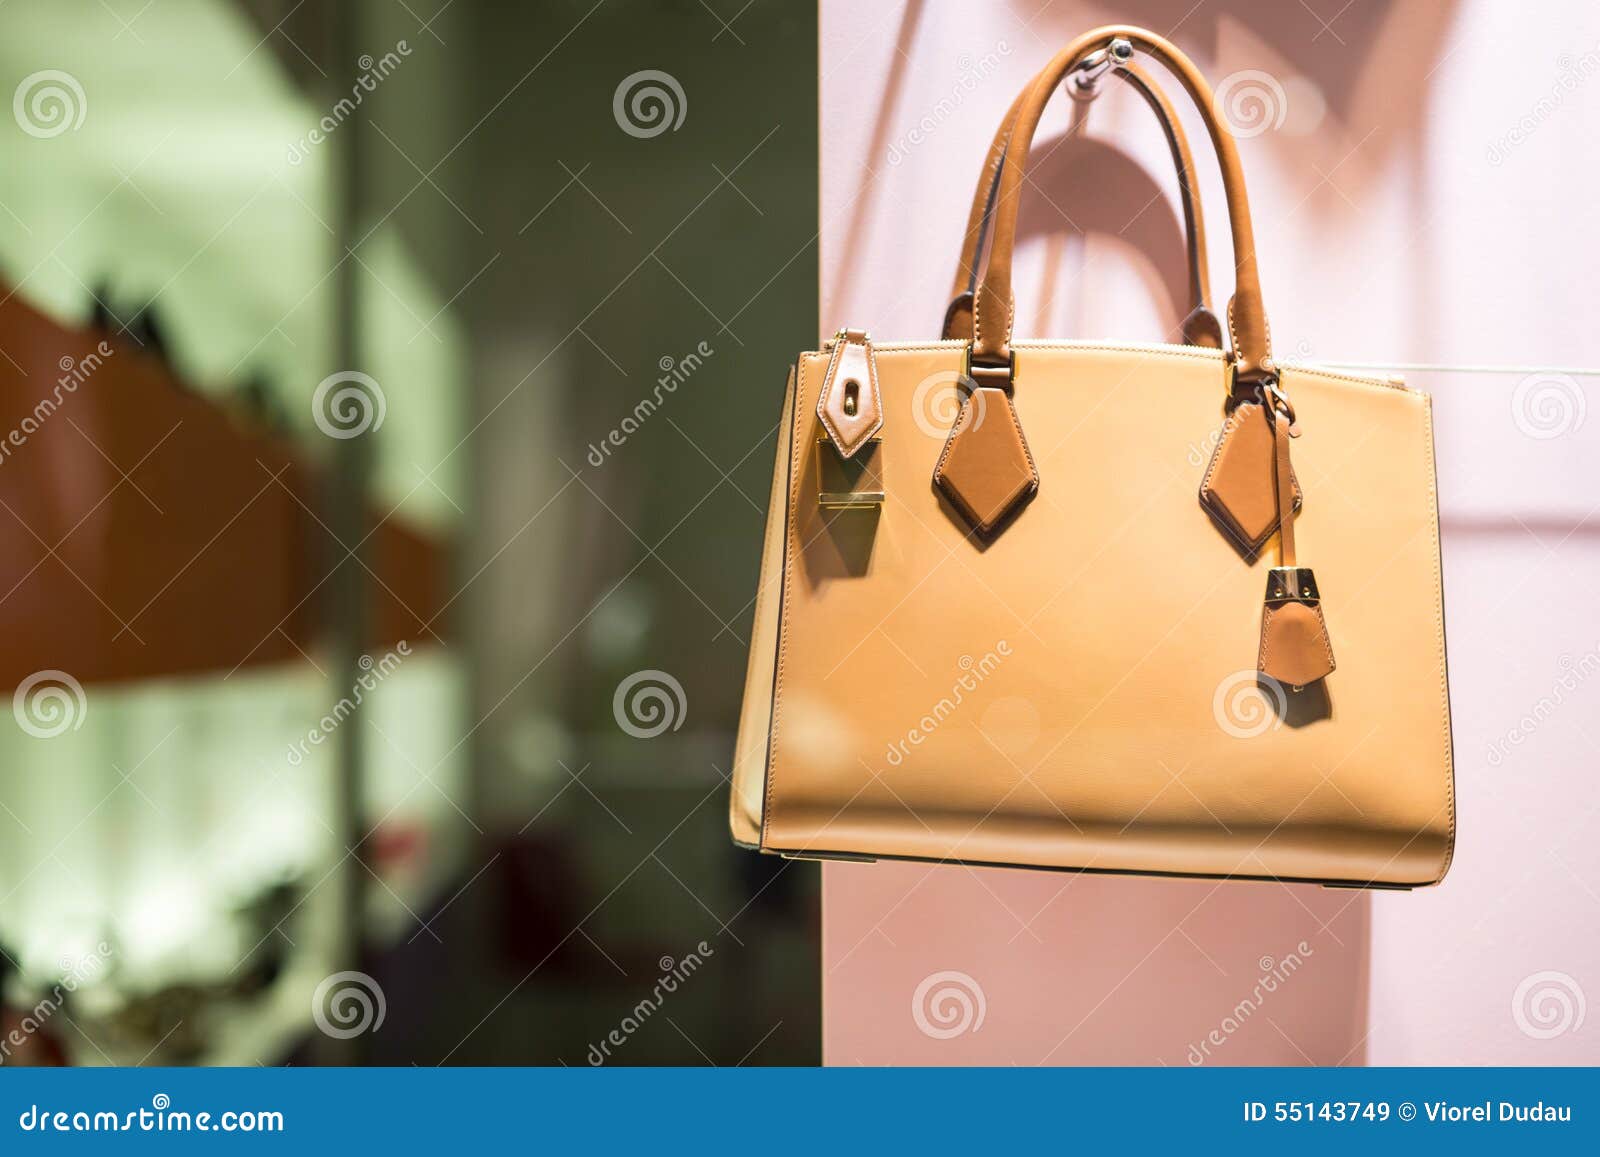 Luxury handbag in store stock image. Image of luxury - 55143749